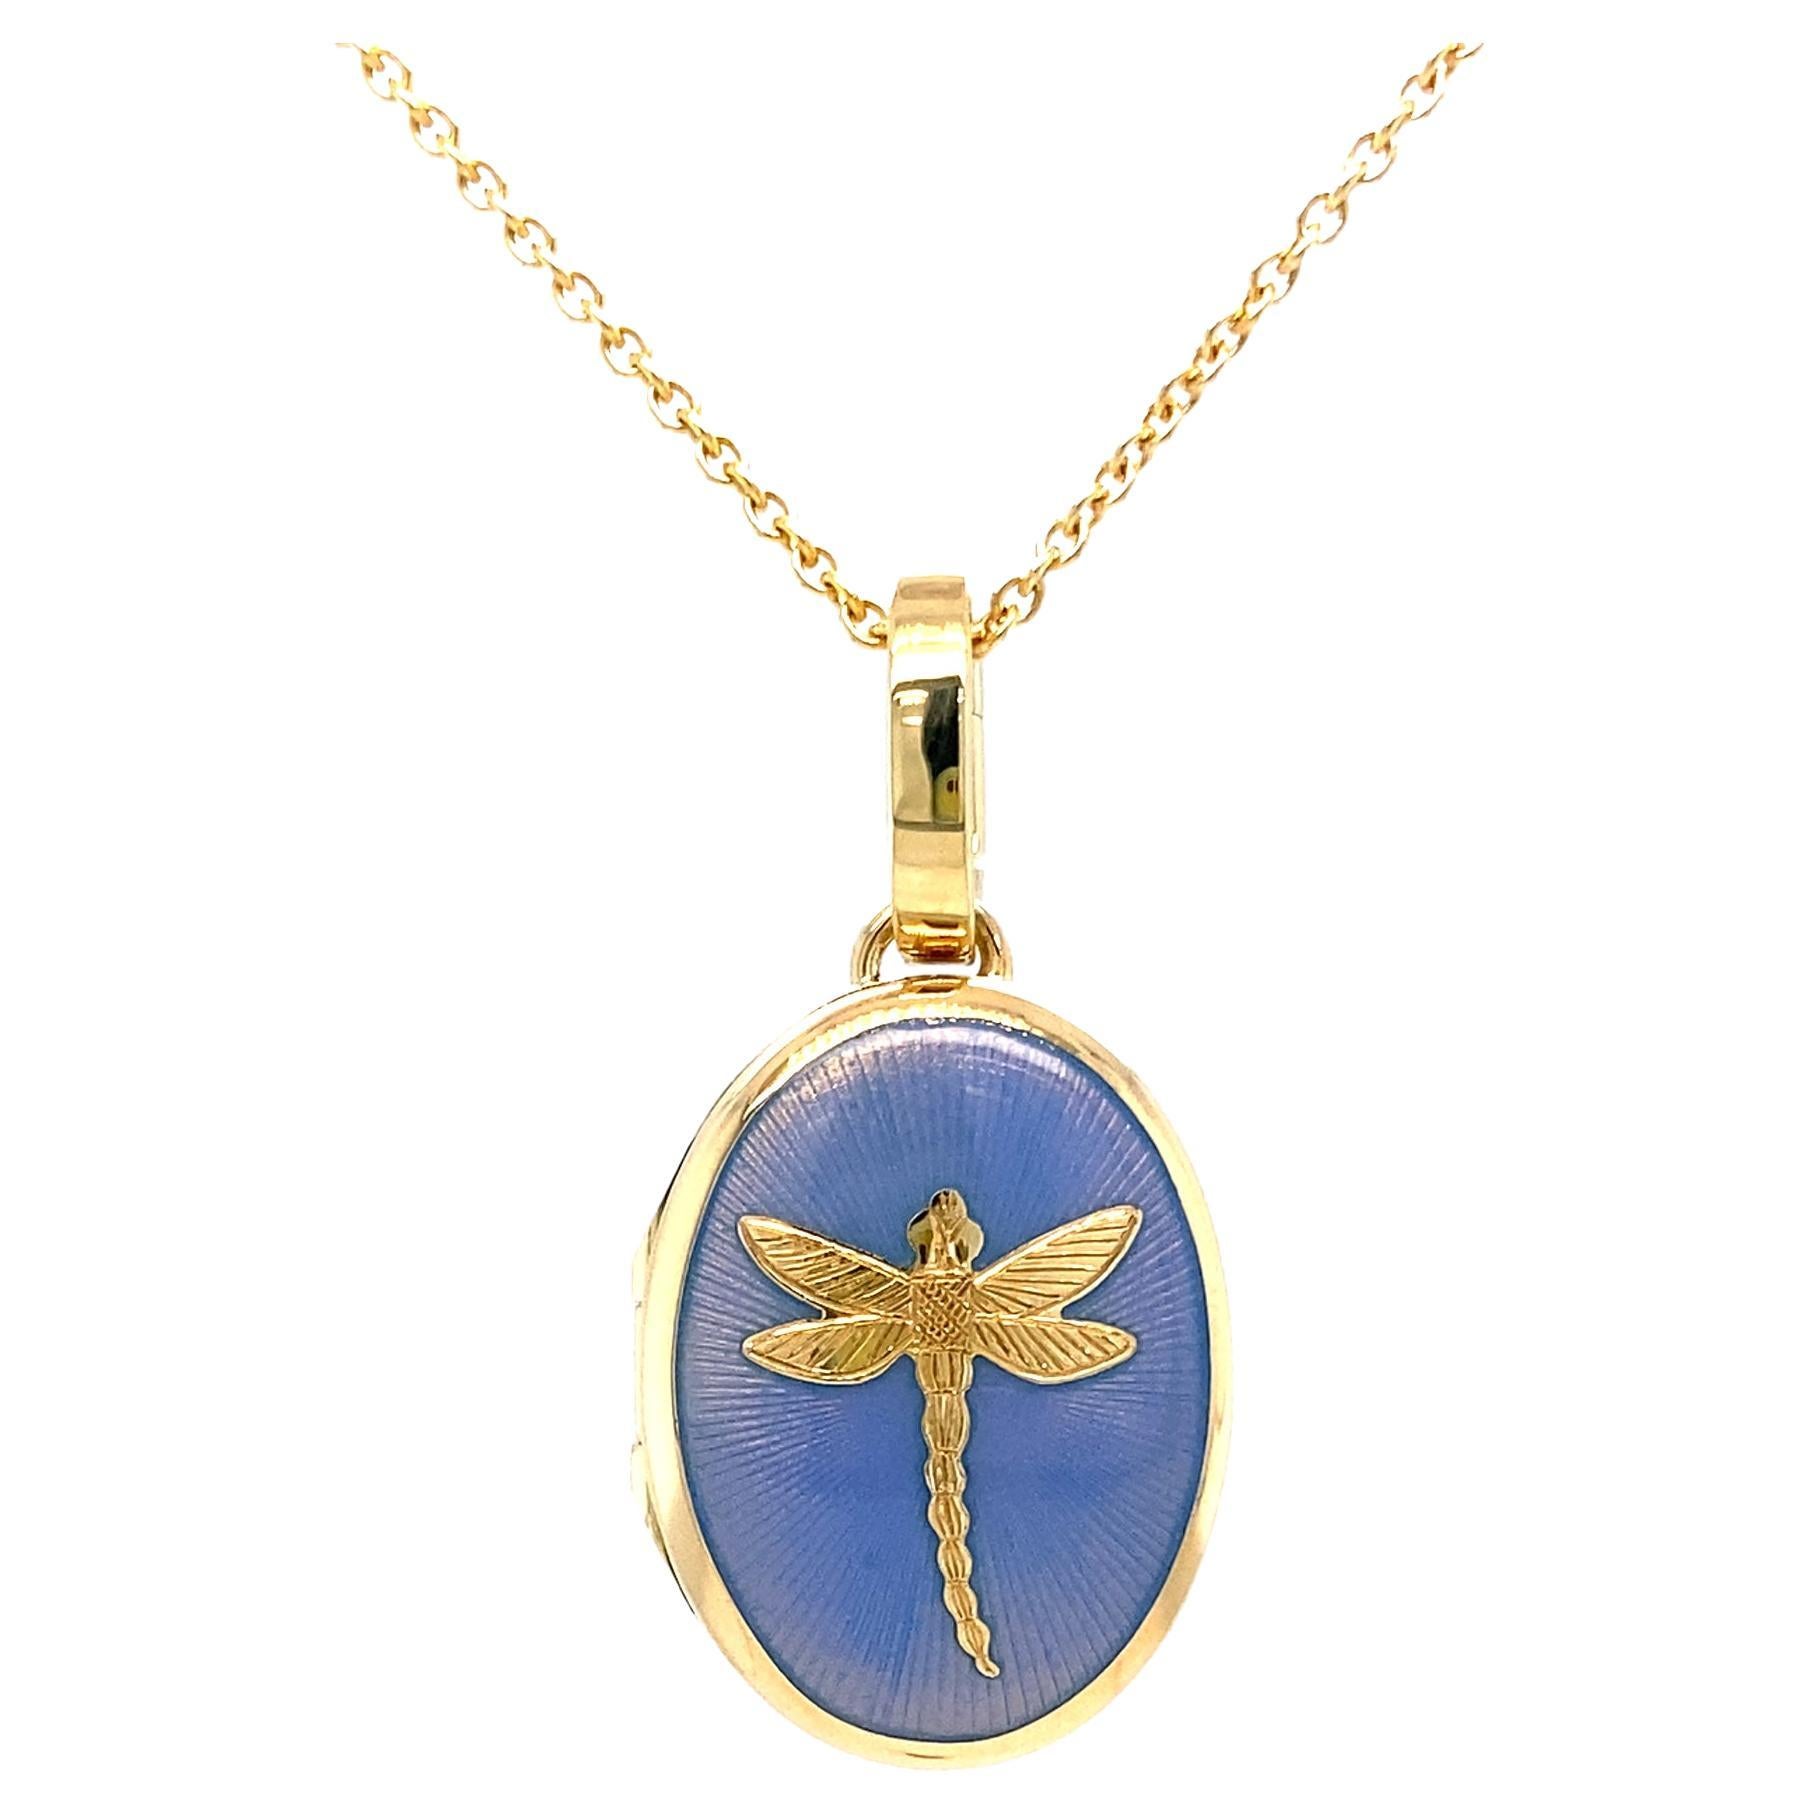 Oval Locket Pendant Necklace Dragonfly 18k Yellow Gold - Opalescent Blue Enamel